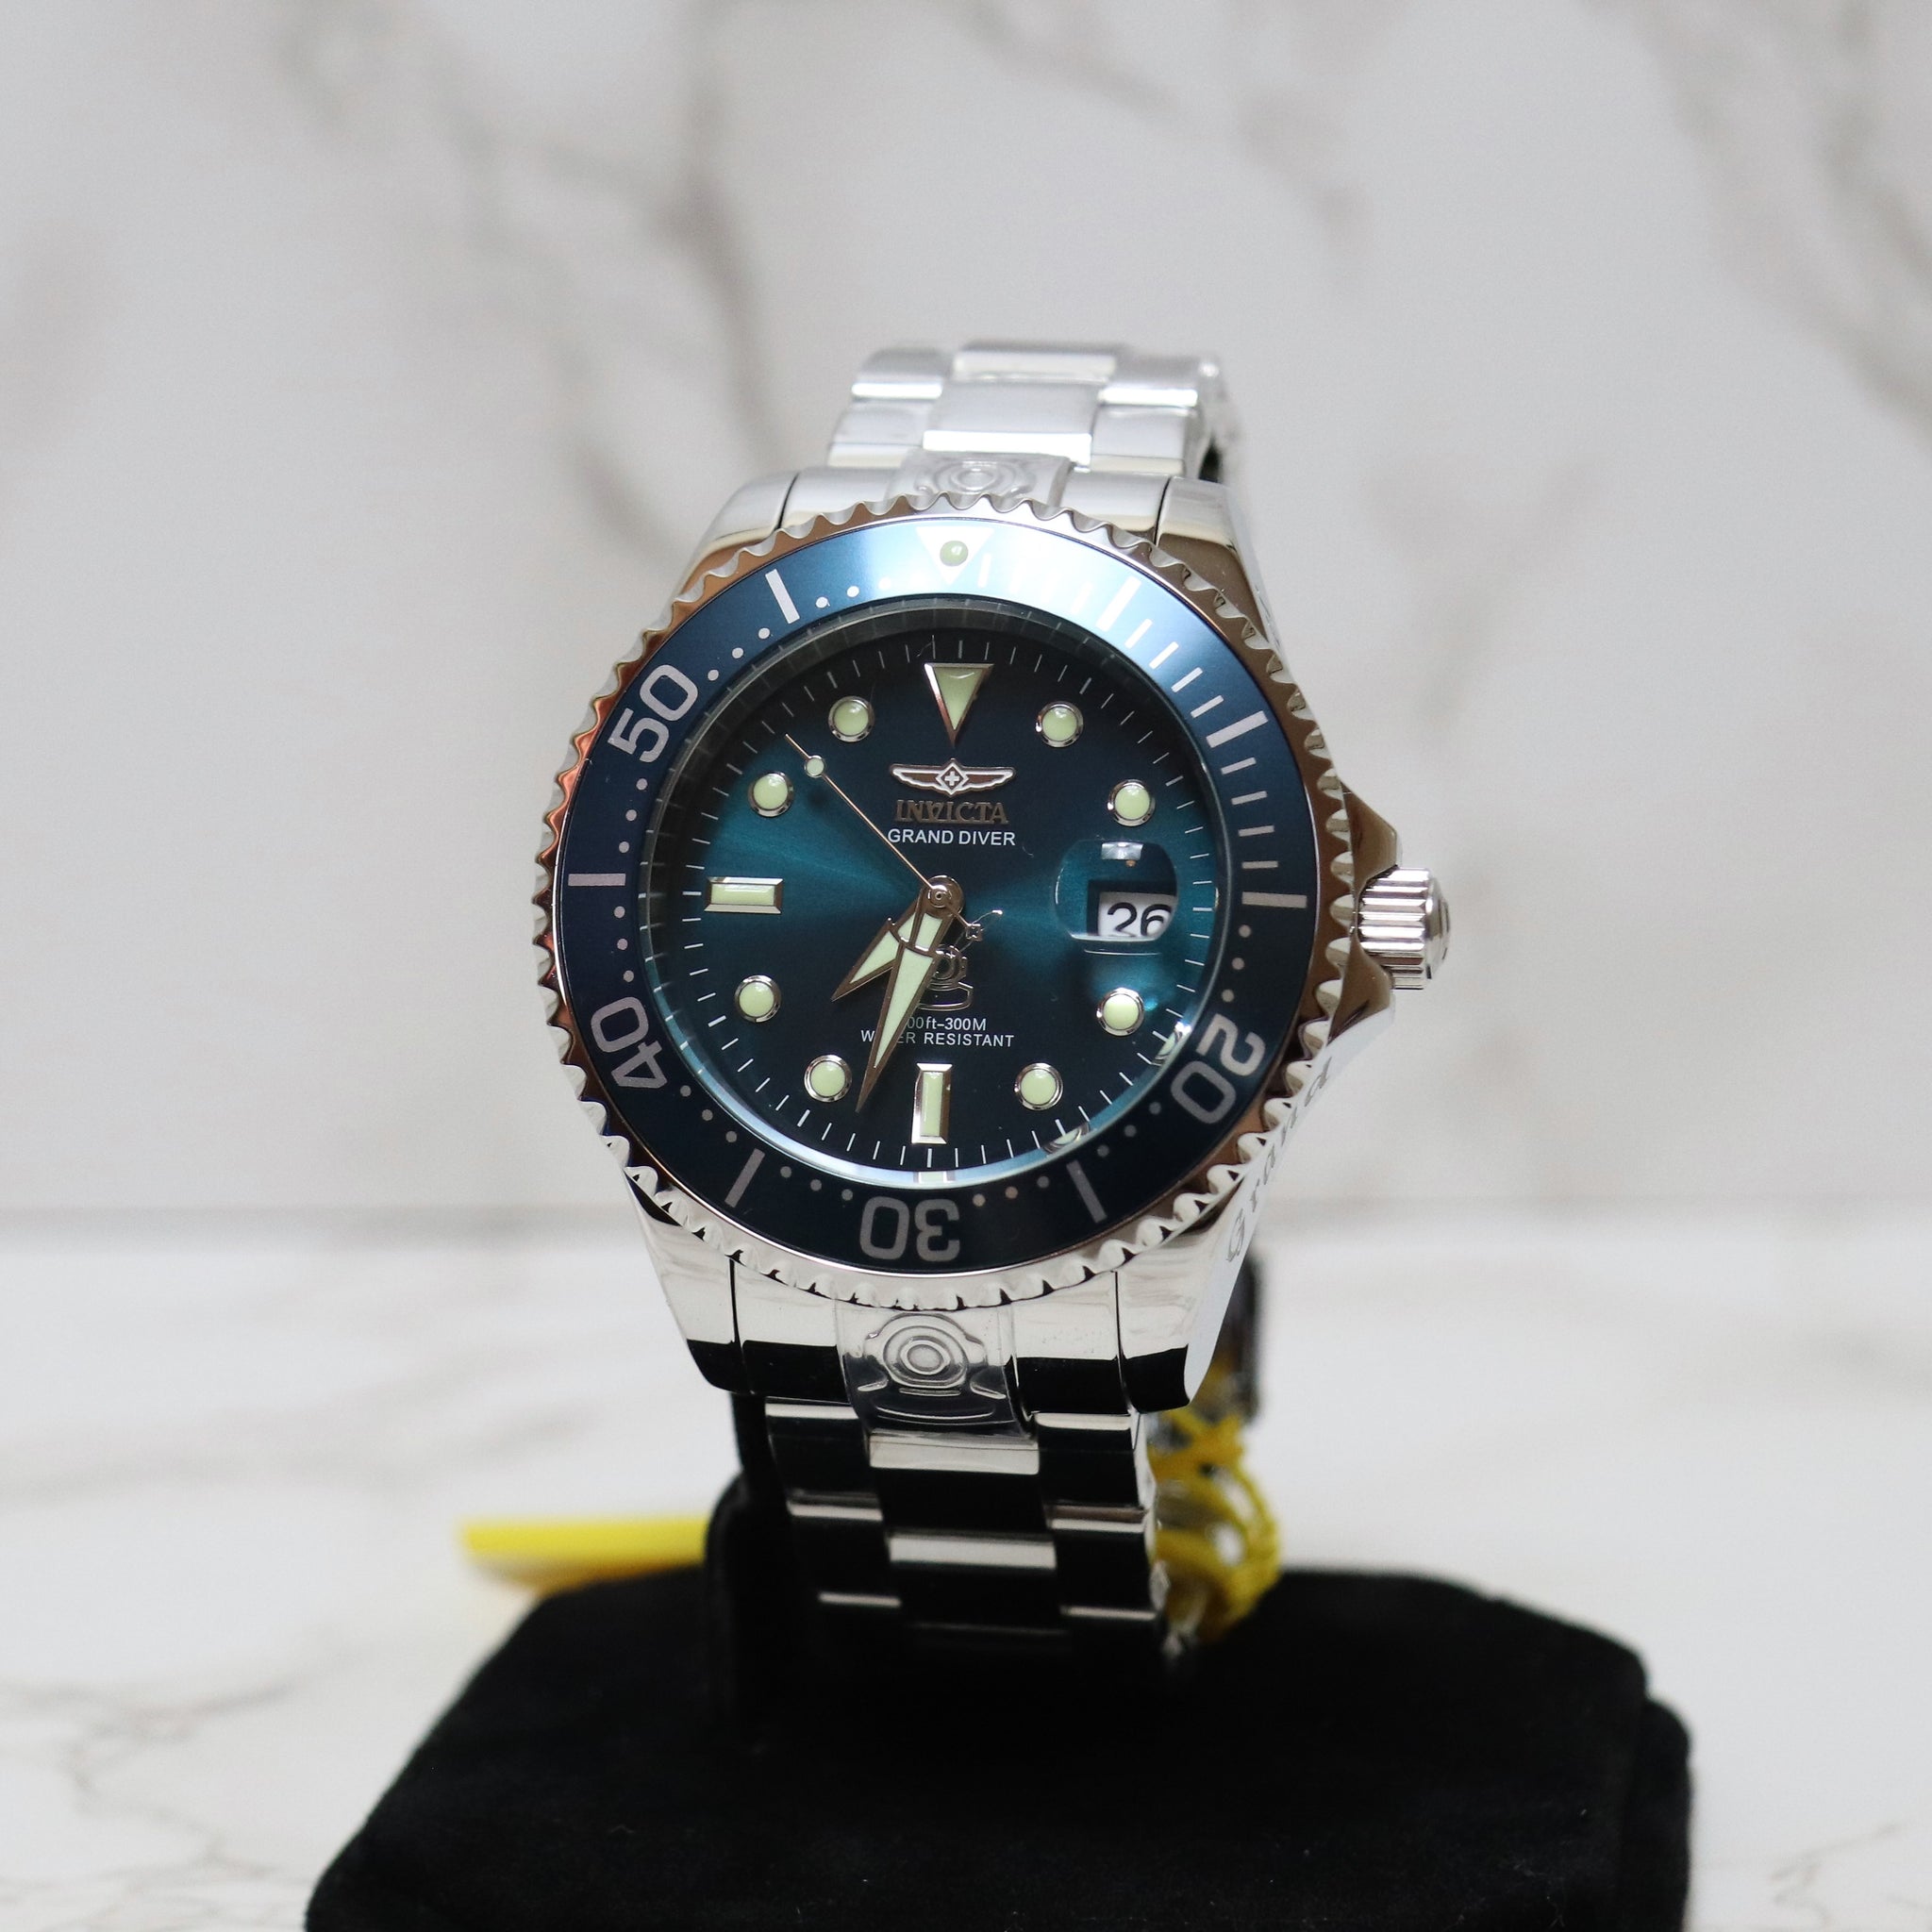 Invicta Grand Diver Automatic Watch – Ogham Timepieces Dublin